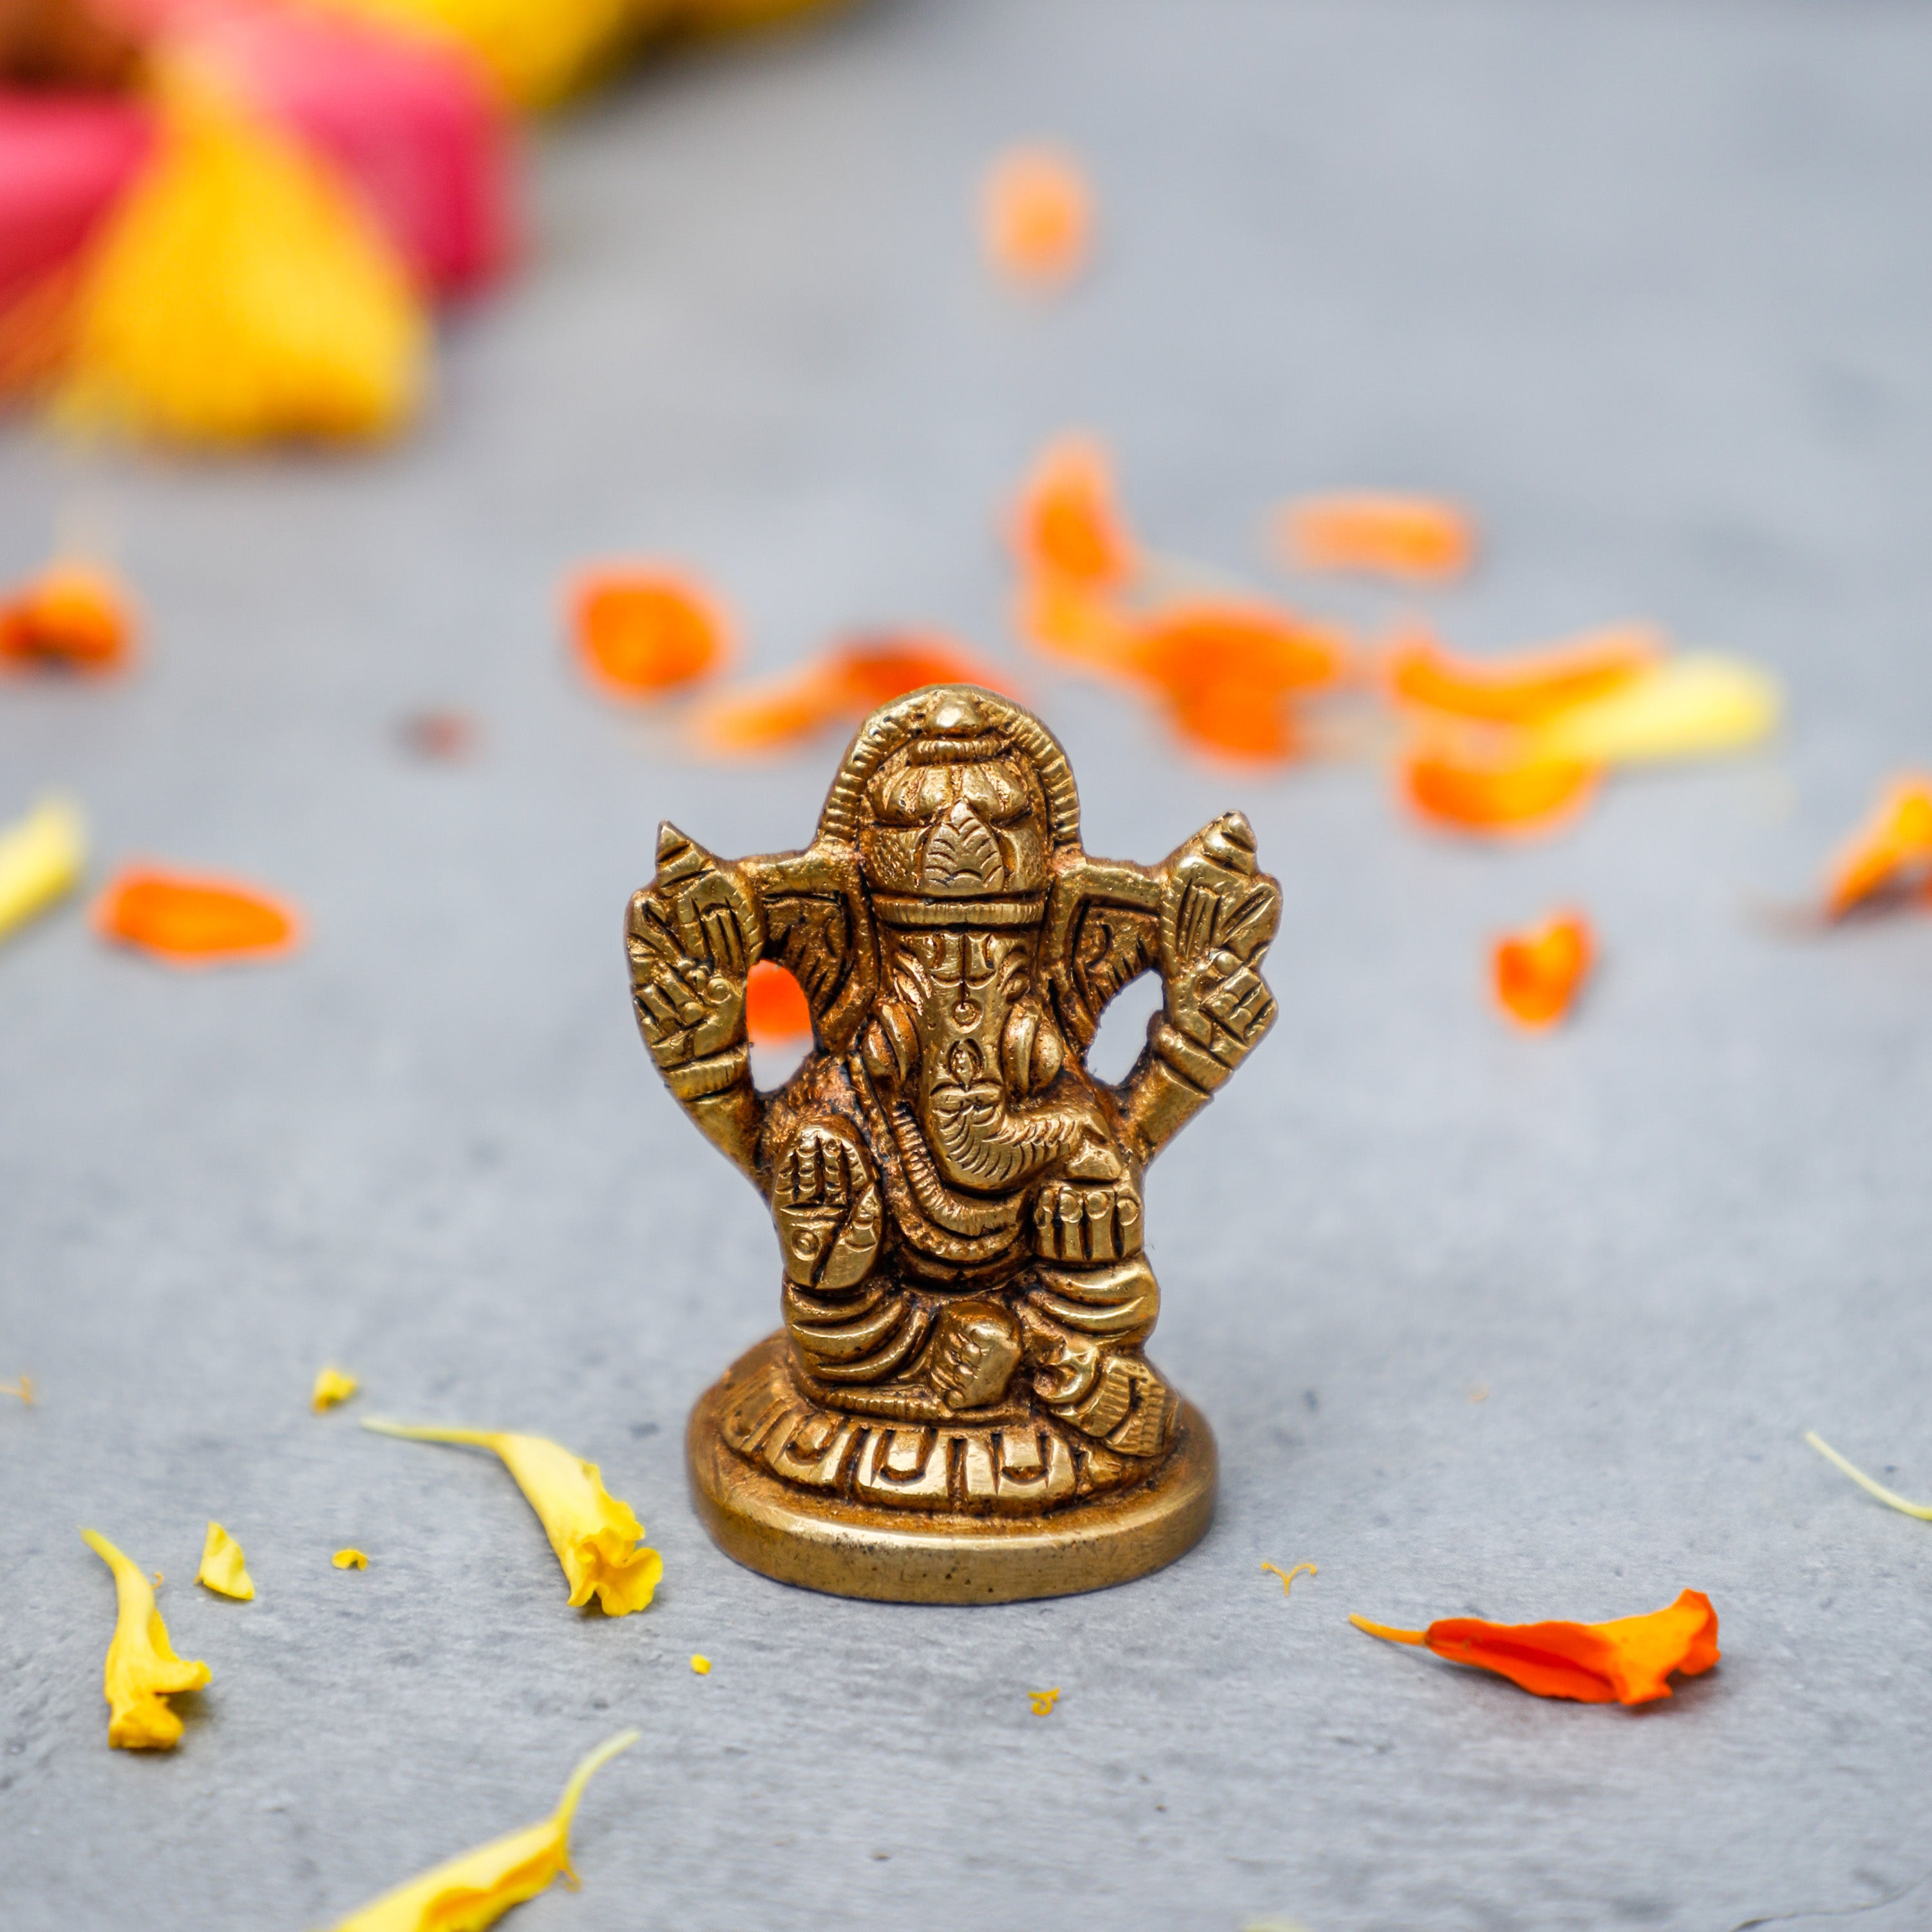 Lord Ganesha Idols for Gift Home Decor Pooja - Big Ganesh Statue - Standing  God | eBay